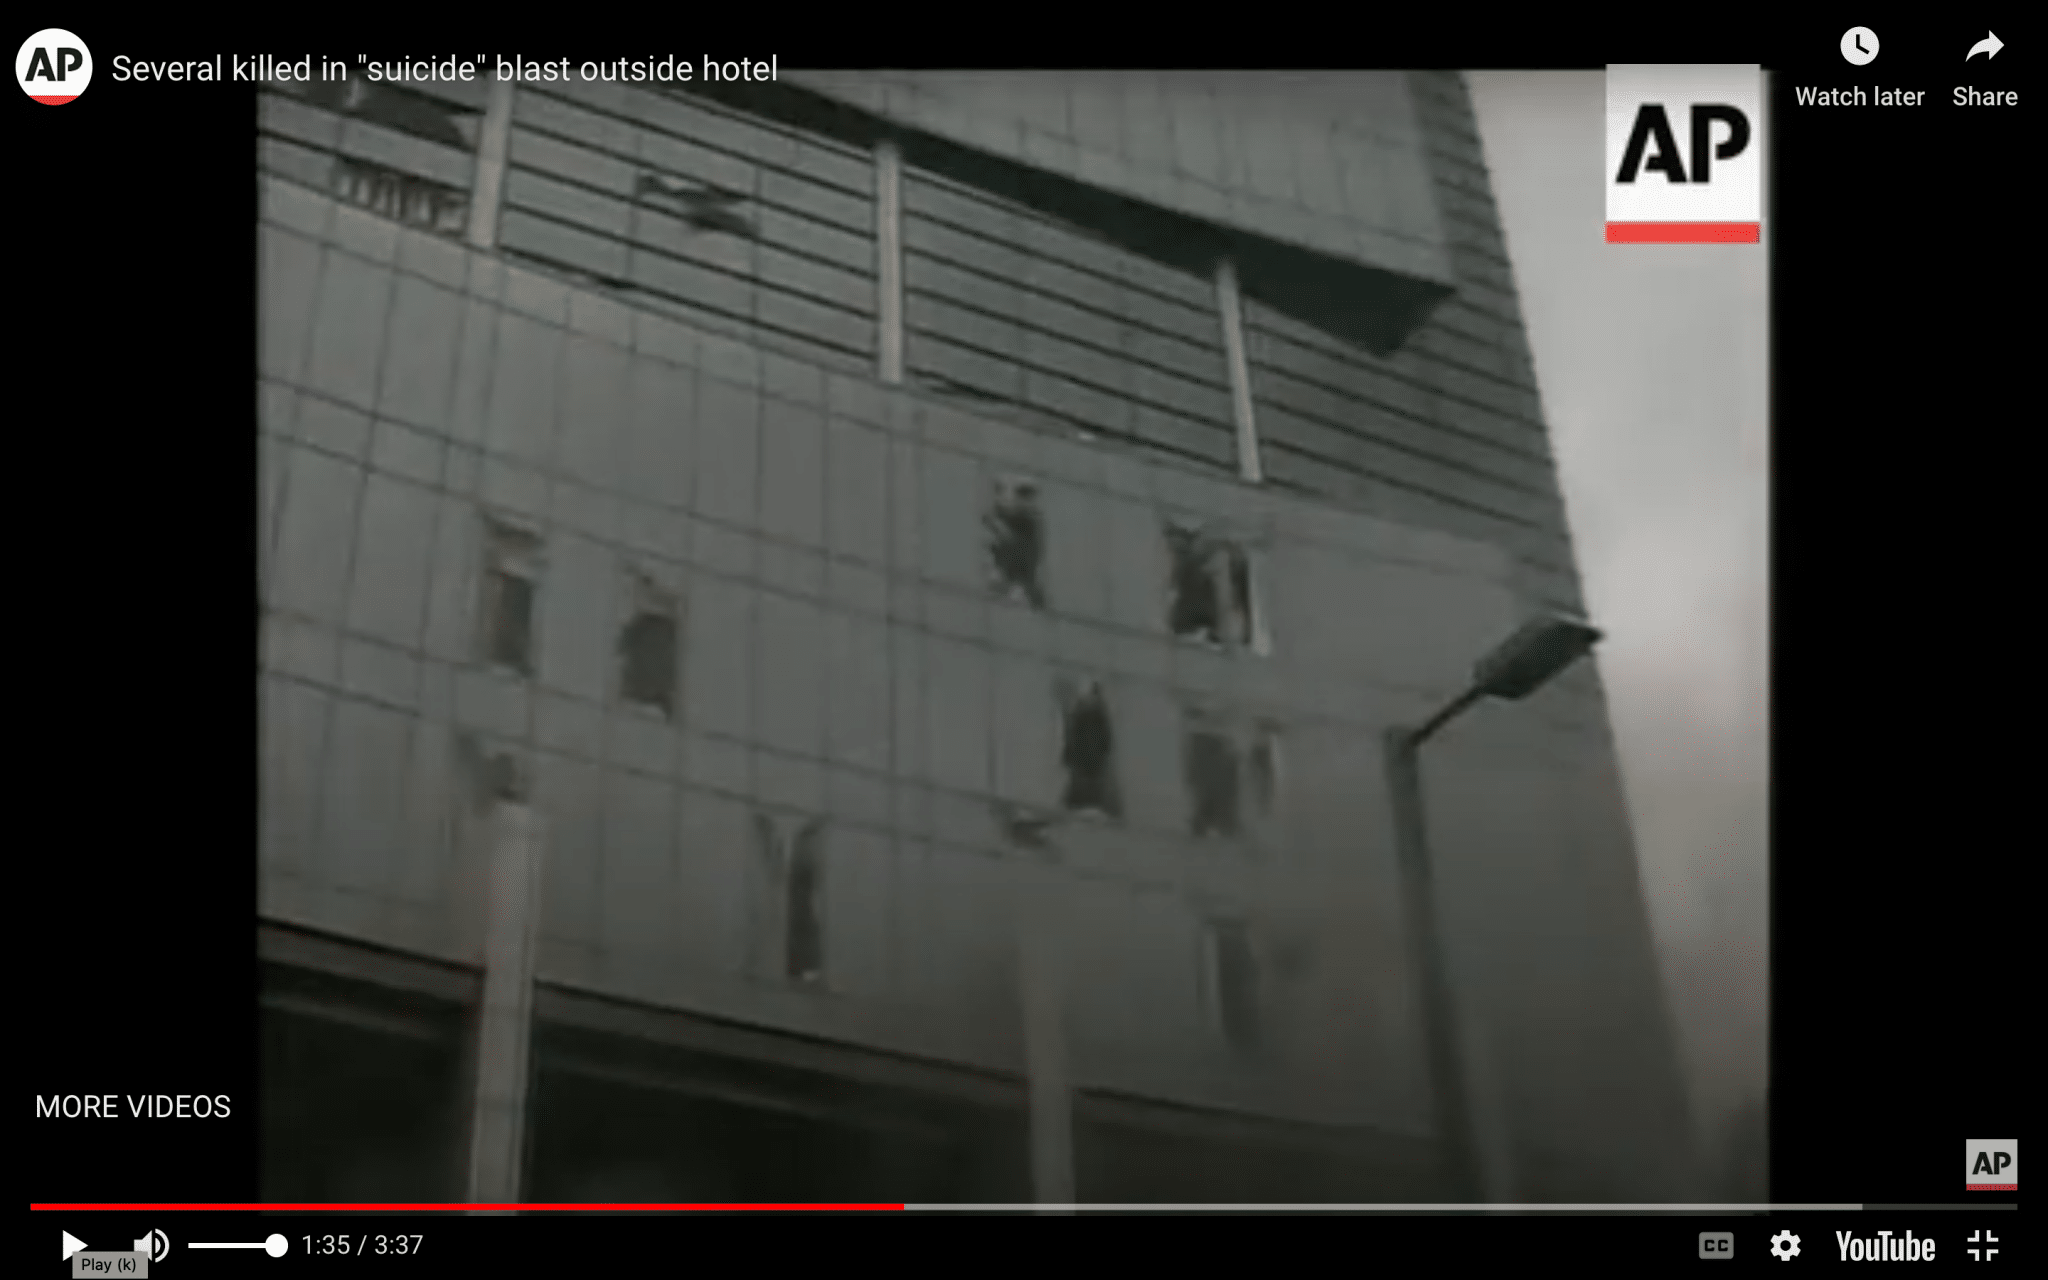 Jakarta Marriott hotel bomb blast 2003